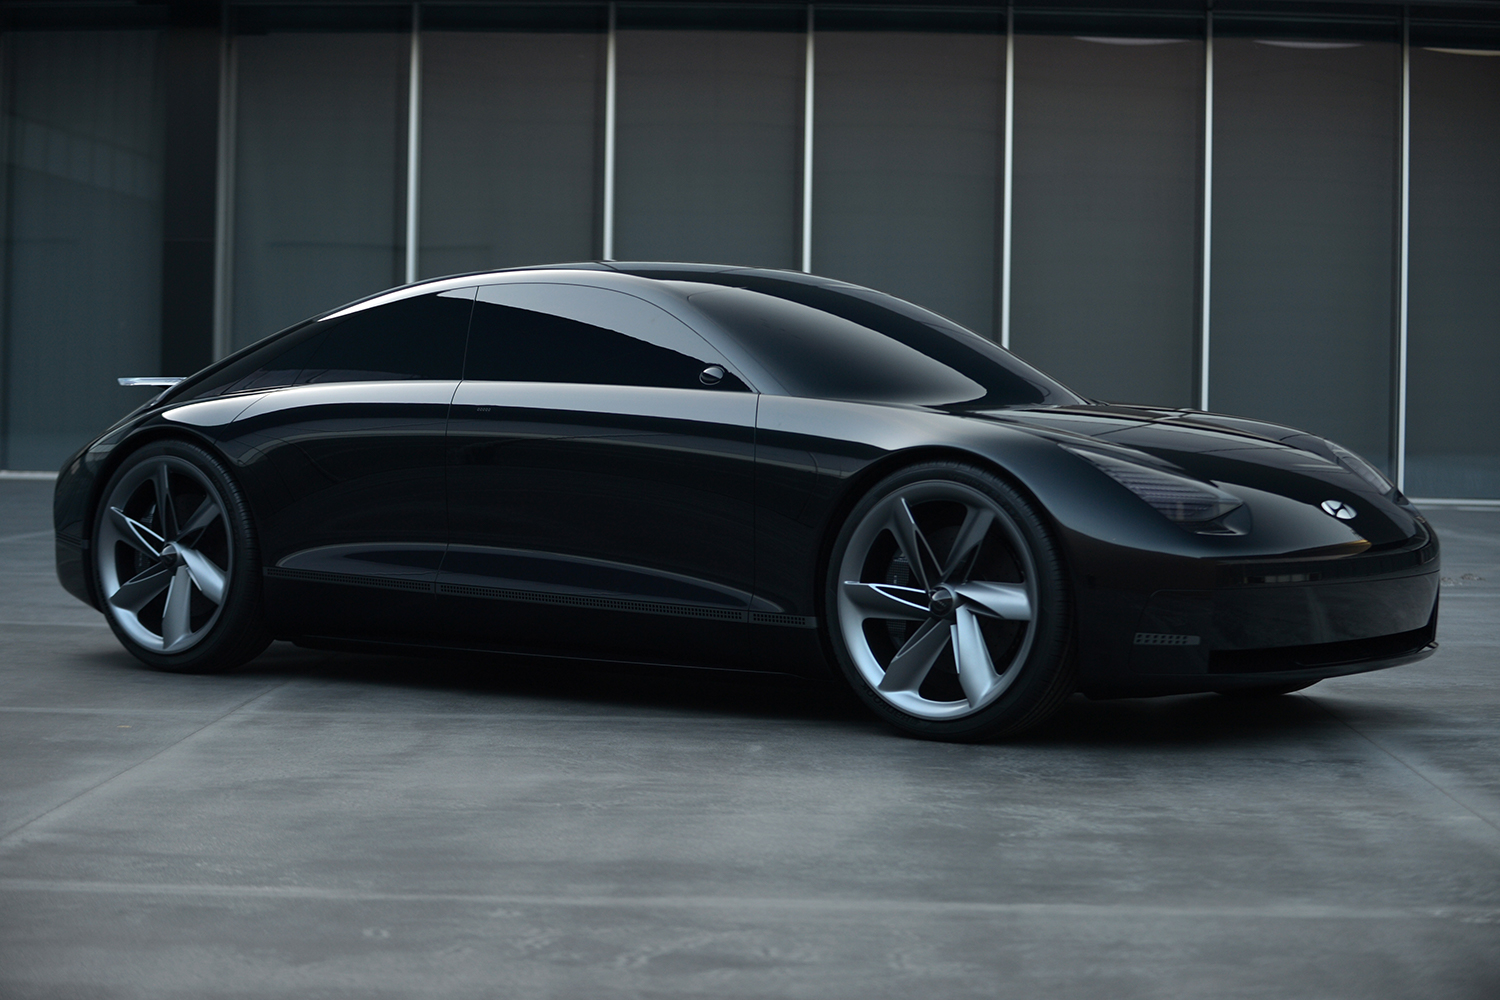 Black electric vehicle concept car